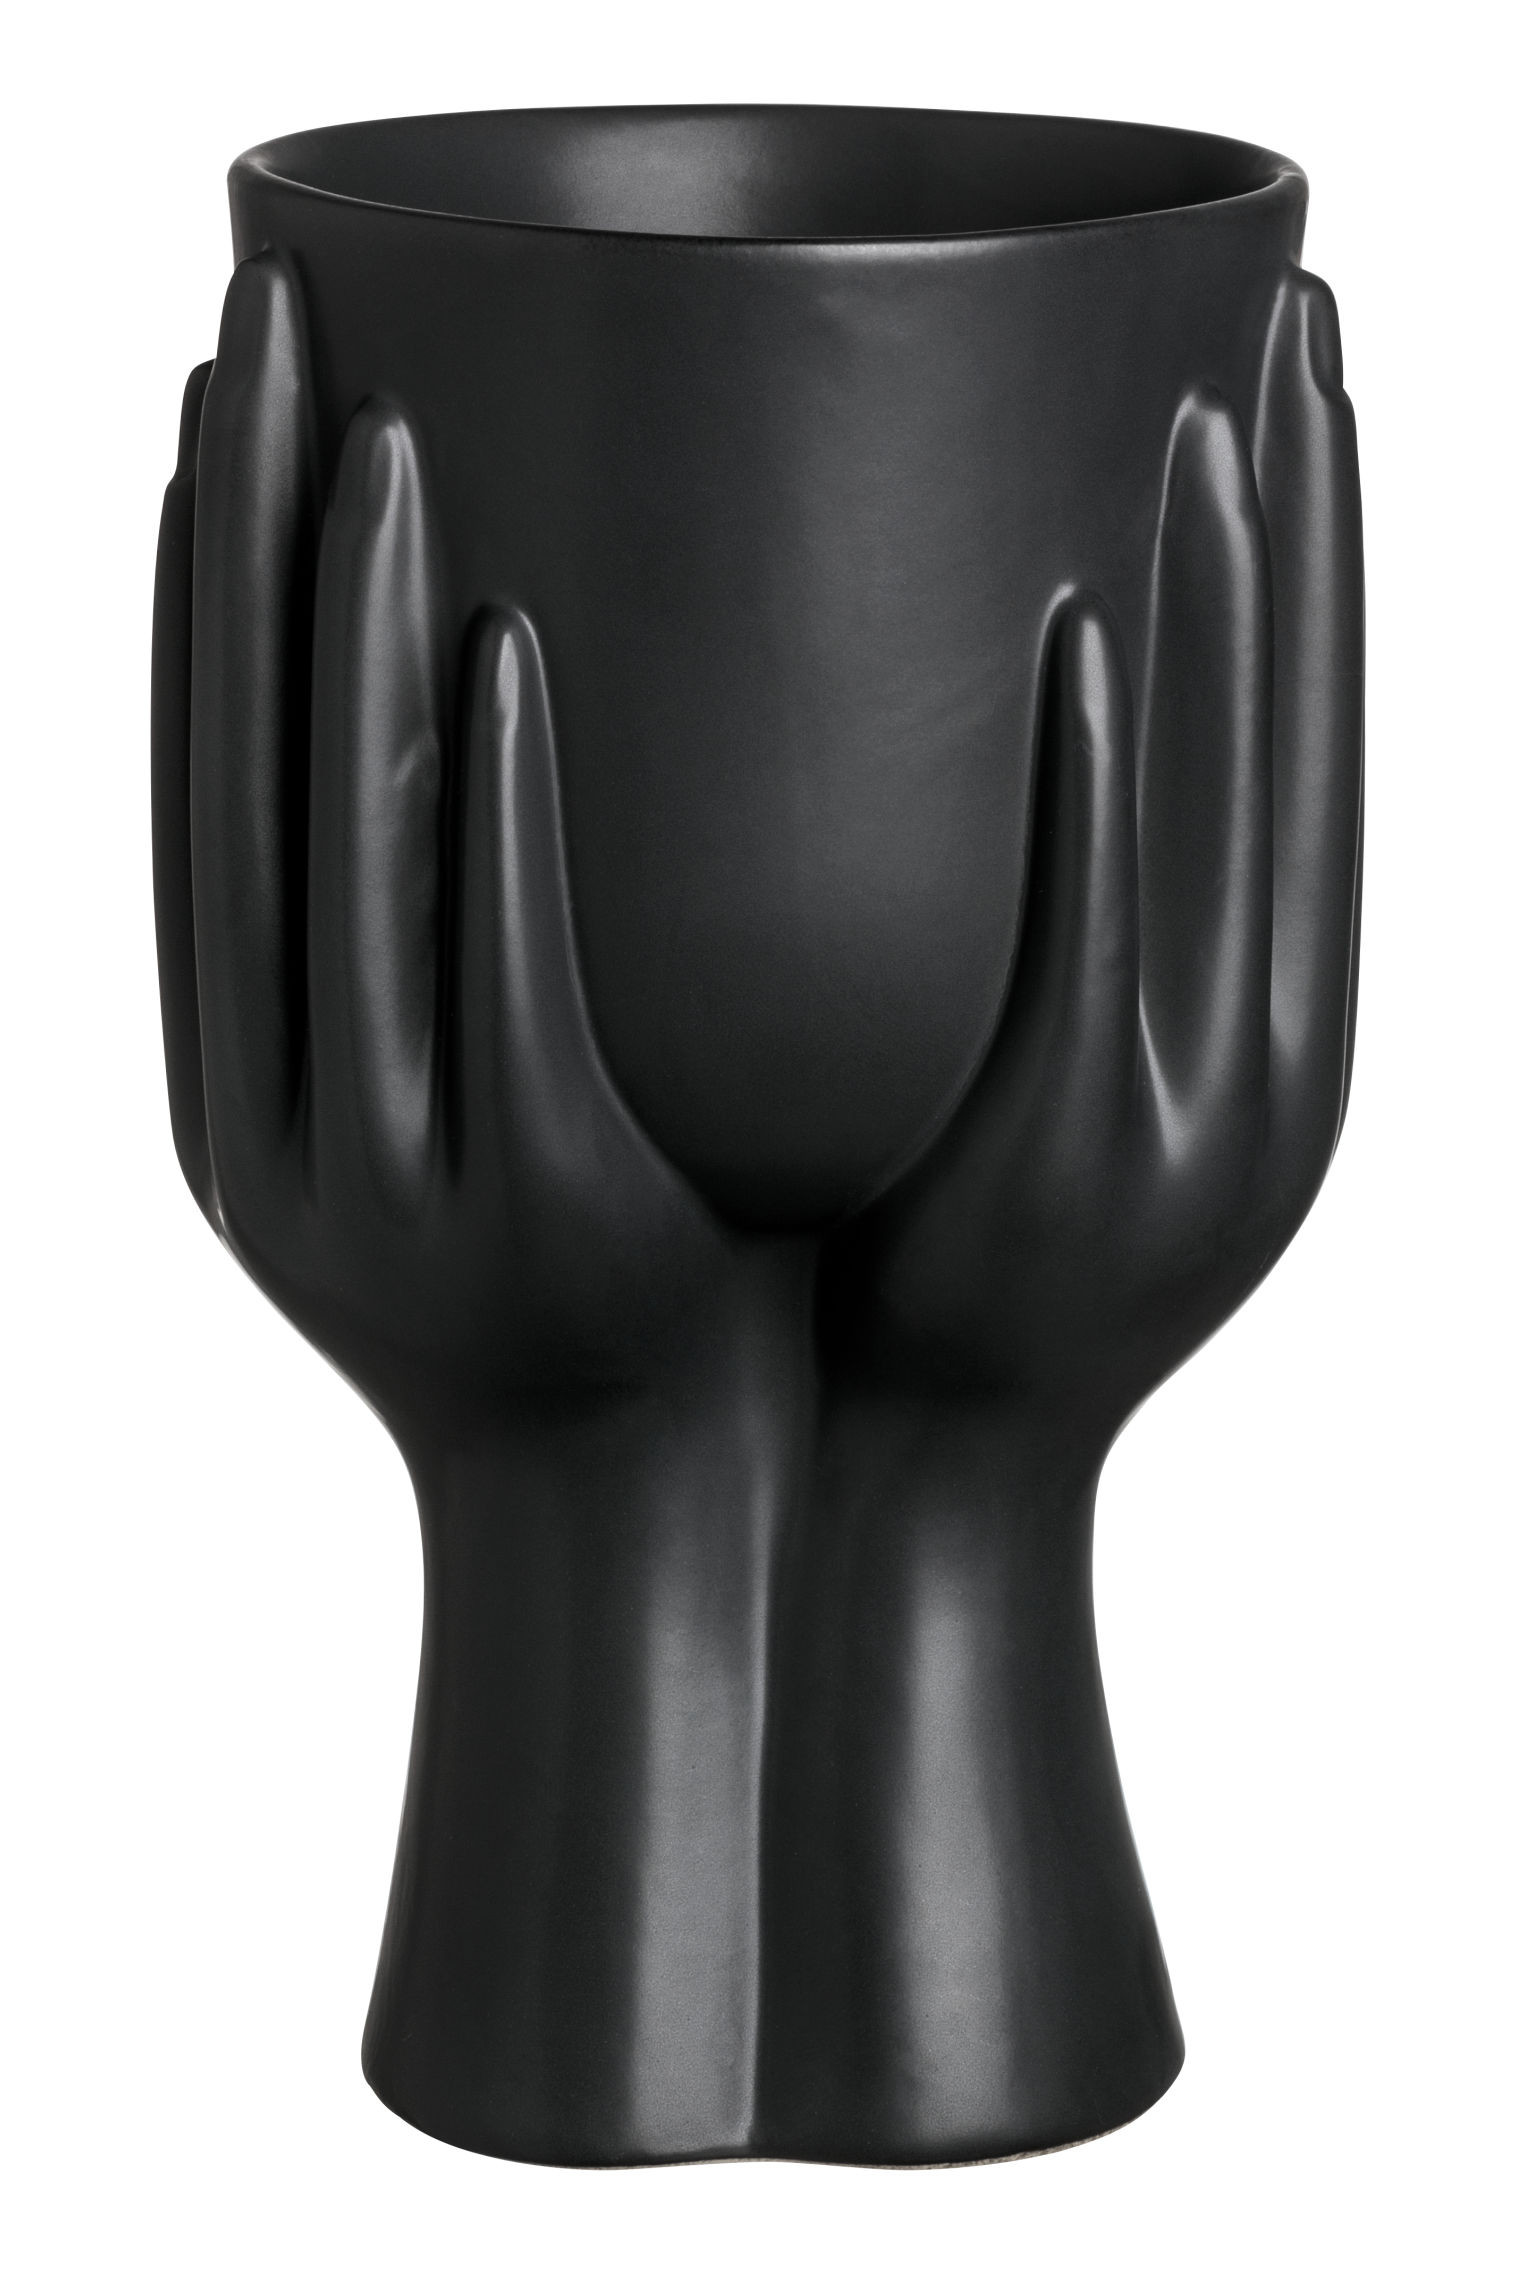 21 attractive Large Plastic Vase 2024 free download large plastic vase of stoneware vase black hm us in hmgoepprod